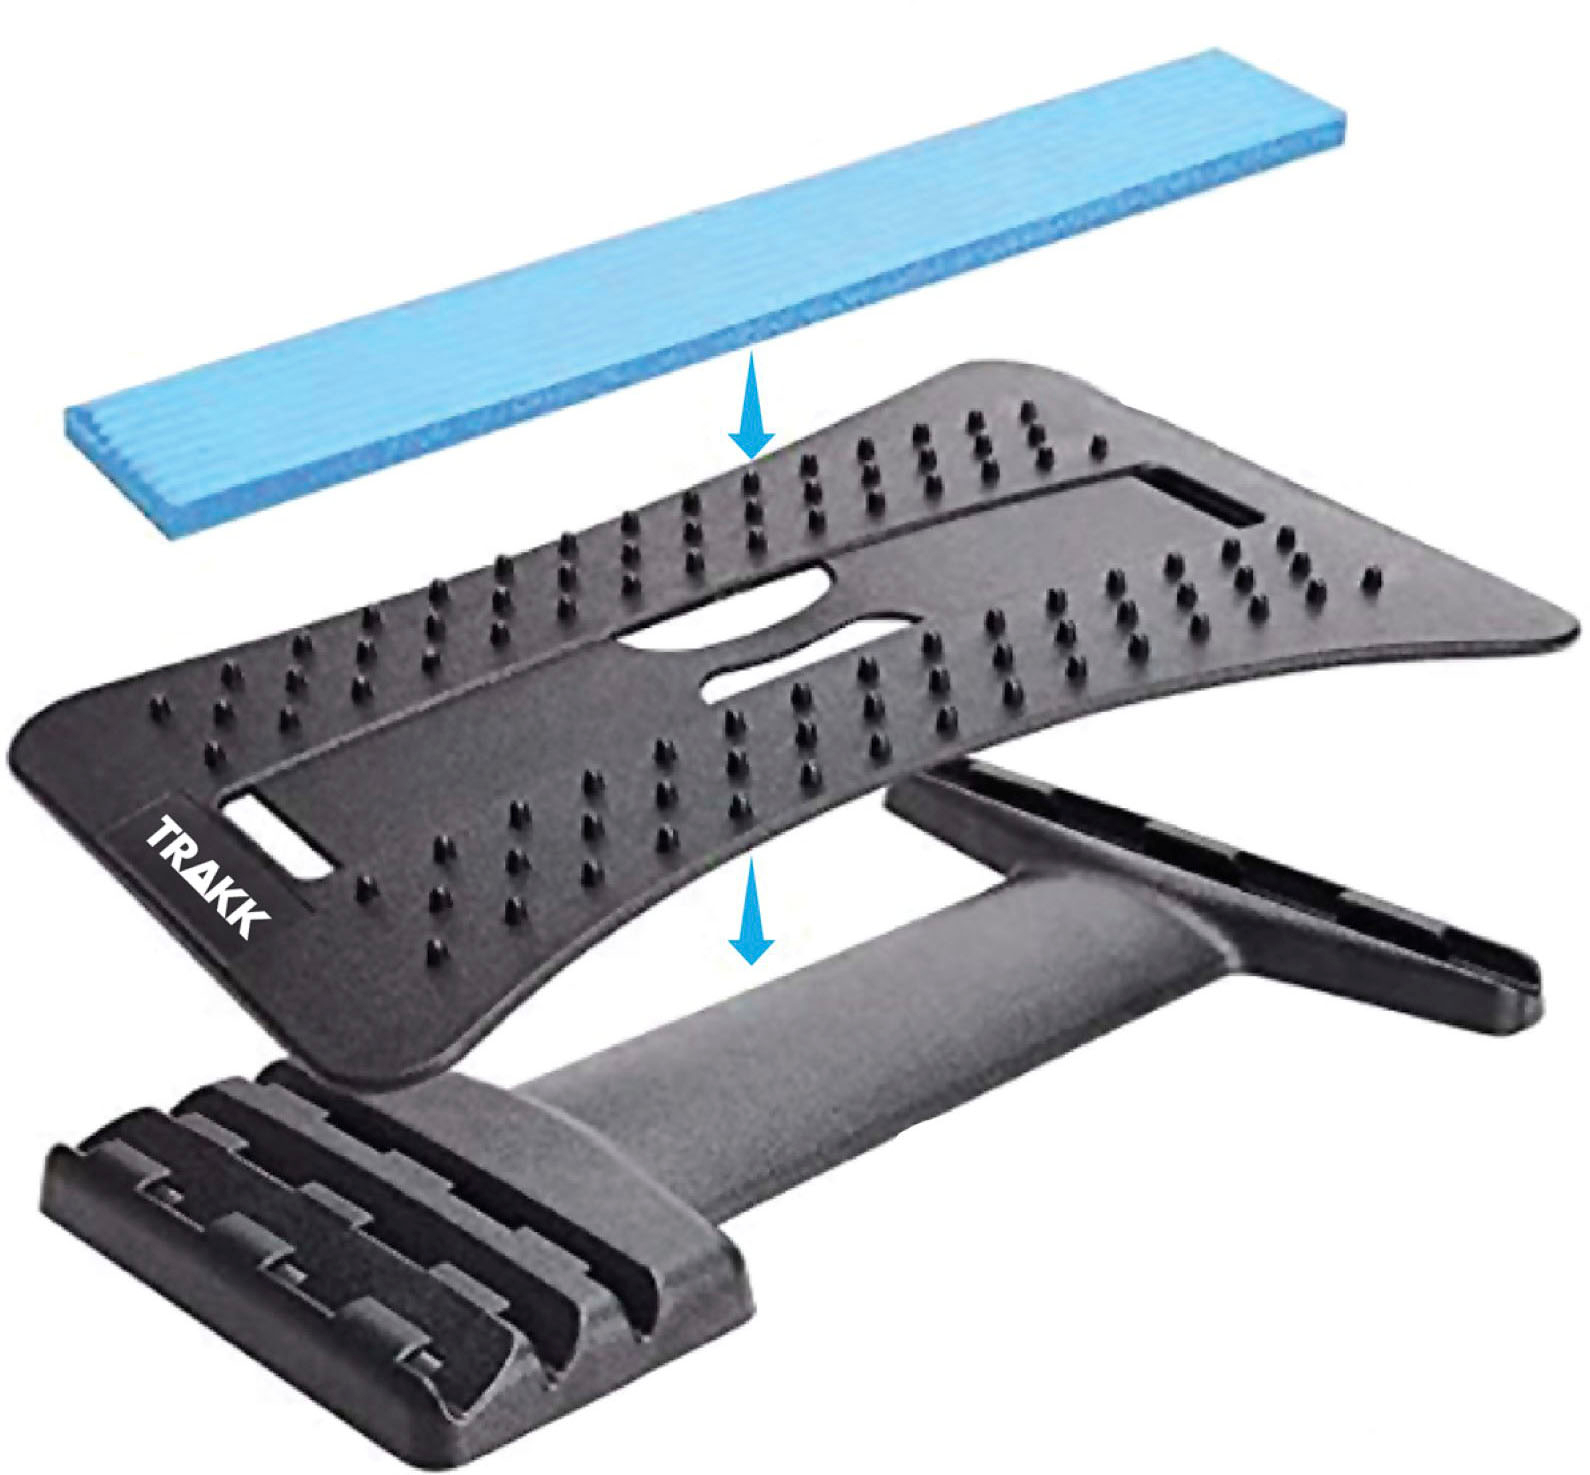 Angle View: TRAKK - Multi Level Neck Stretching Device - Black/Blue